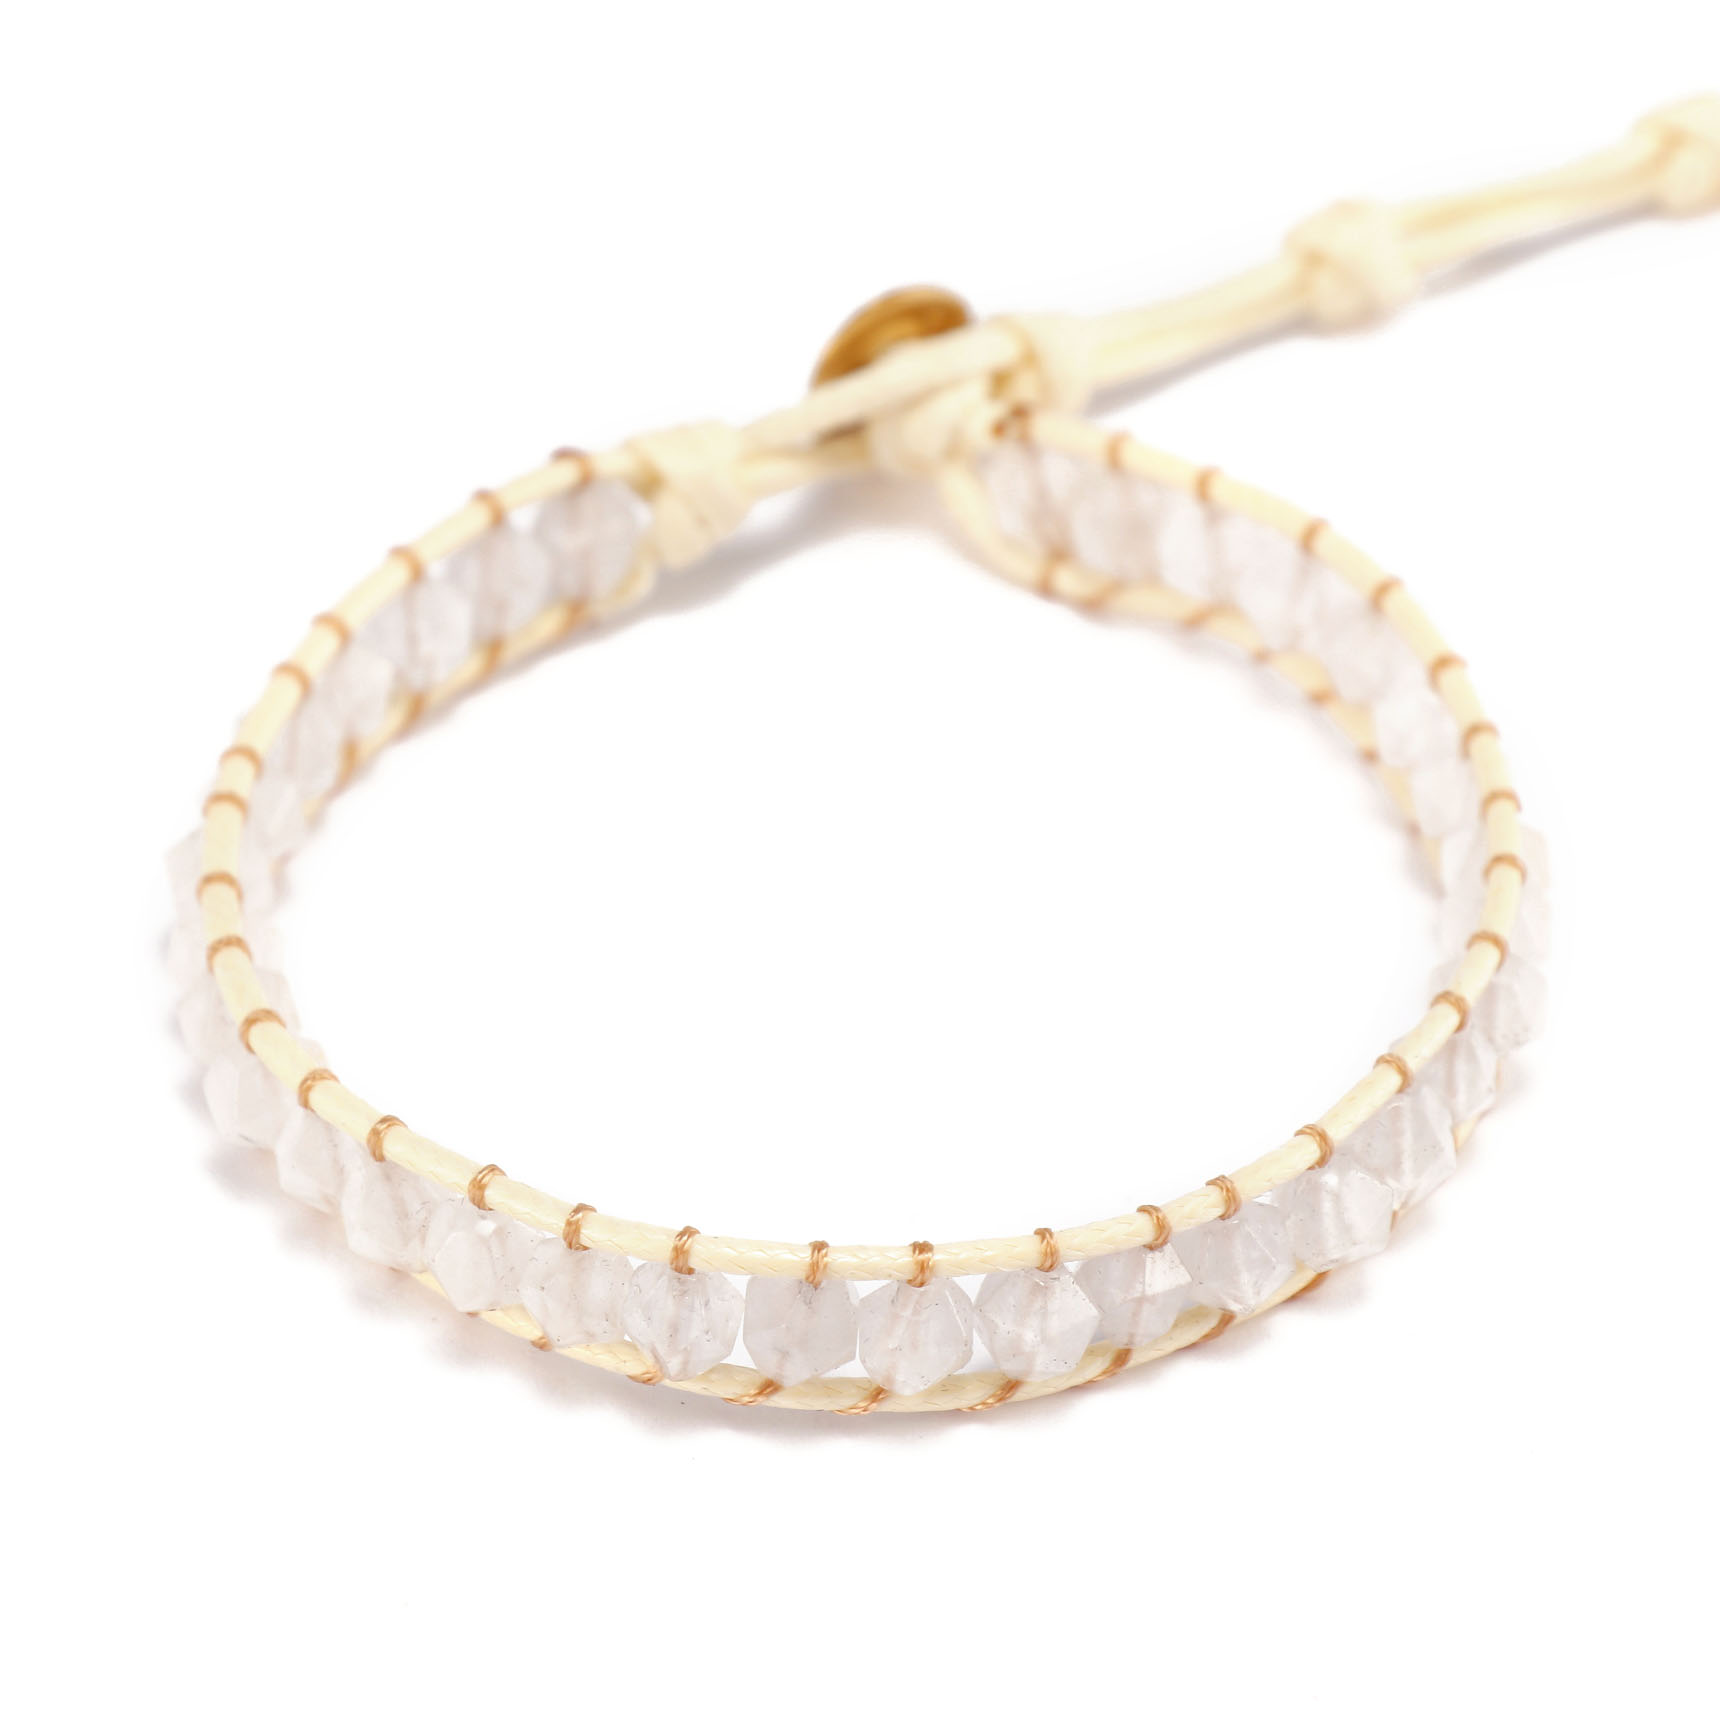 Handmade Stone Beads Wax Cord Woven Bracelet